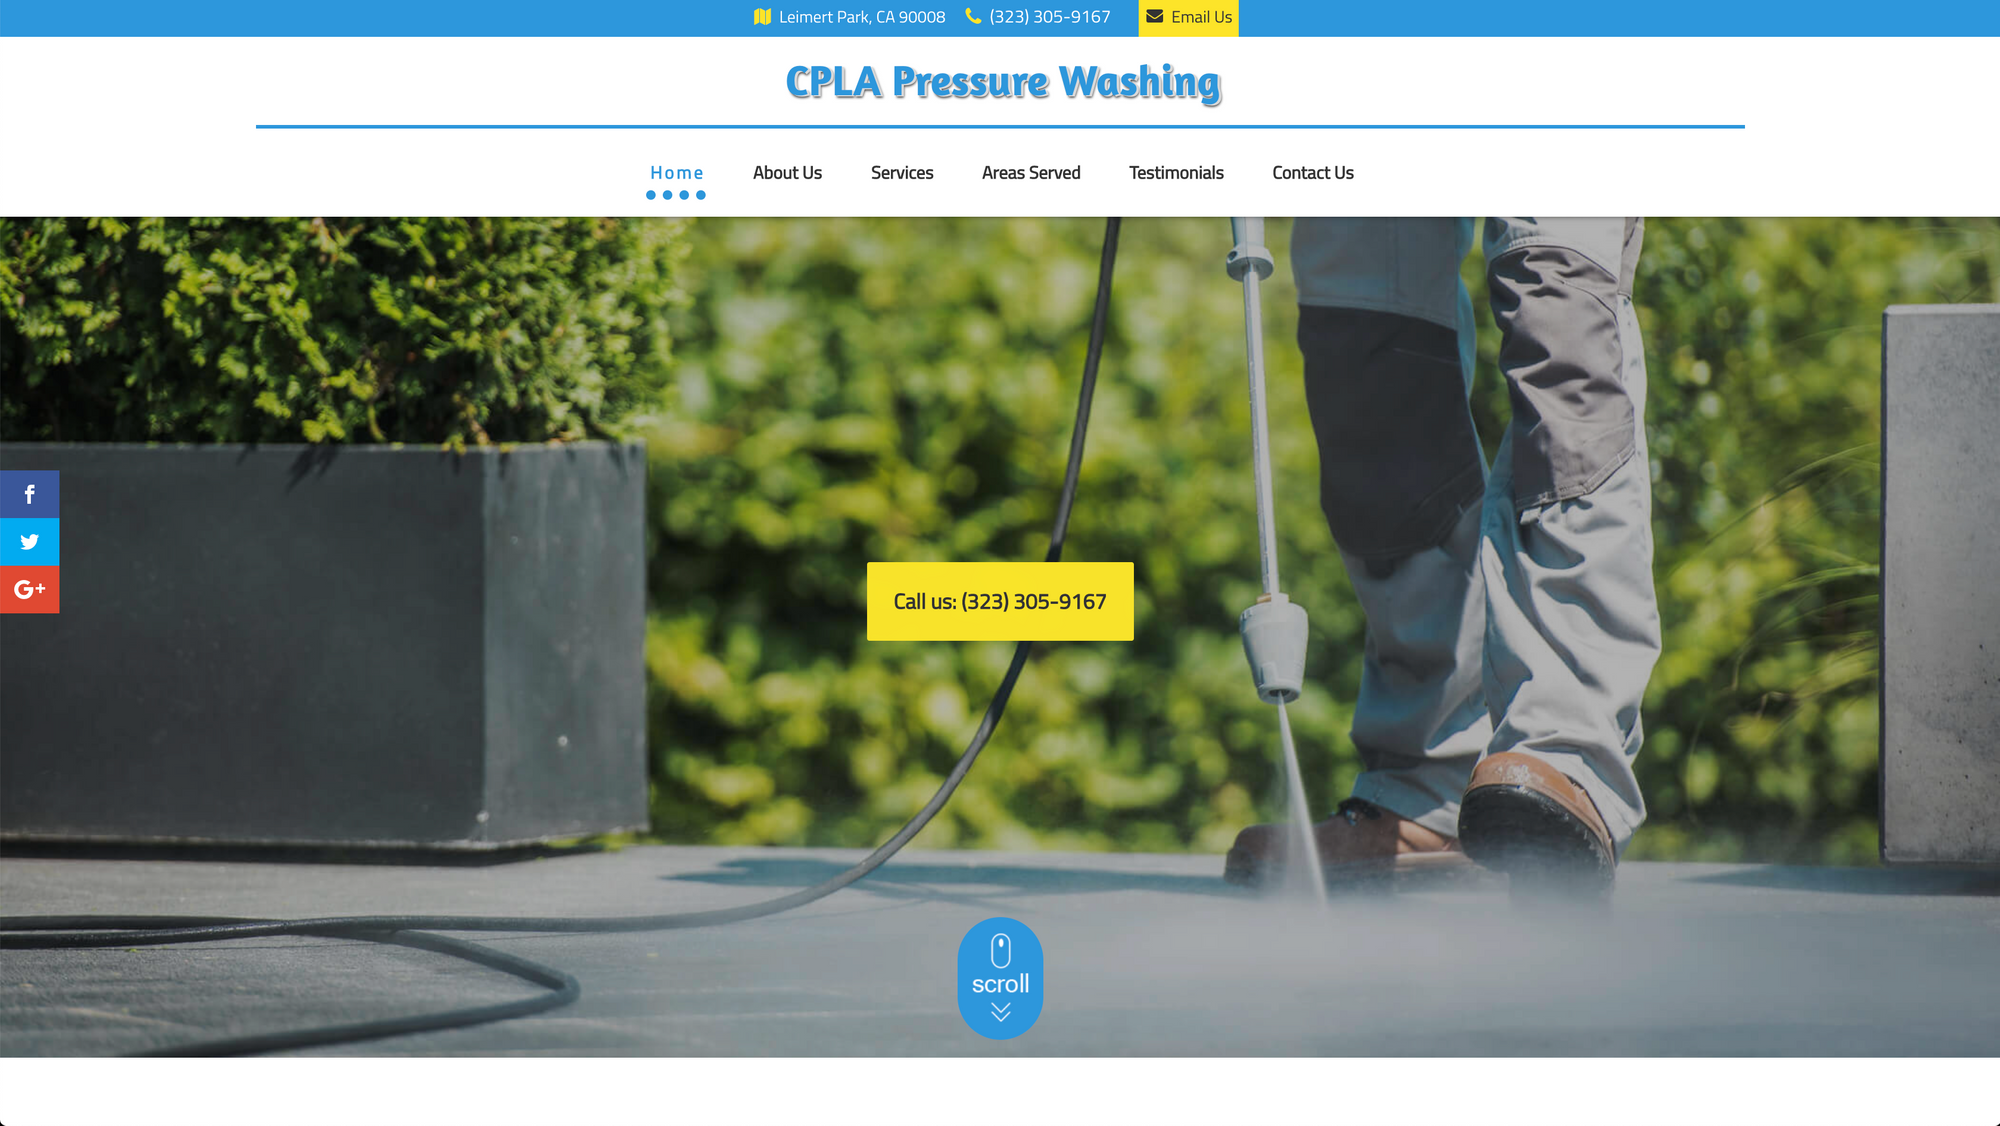 CPLA Pressure Washing